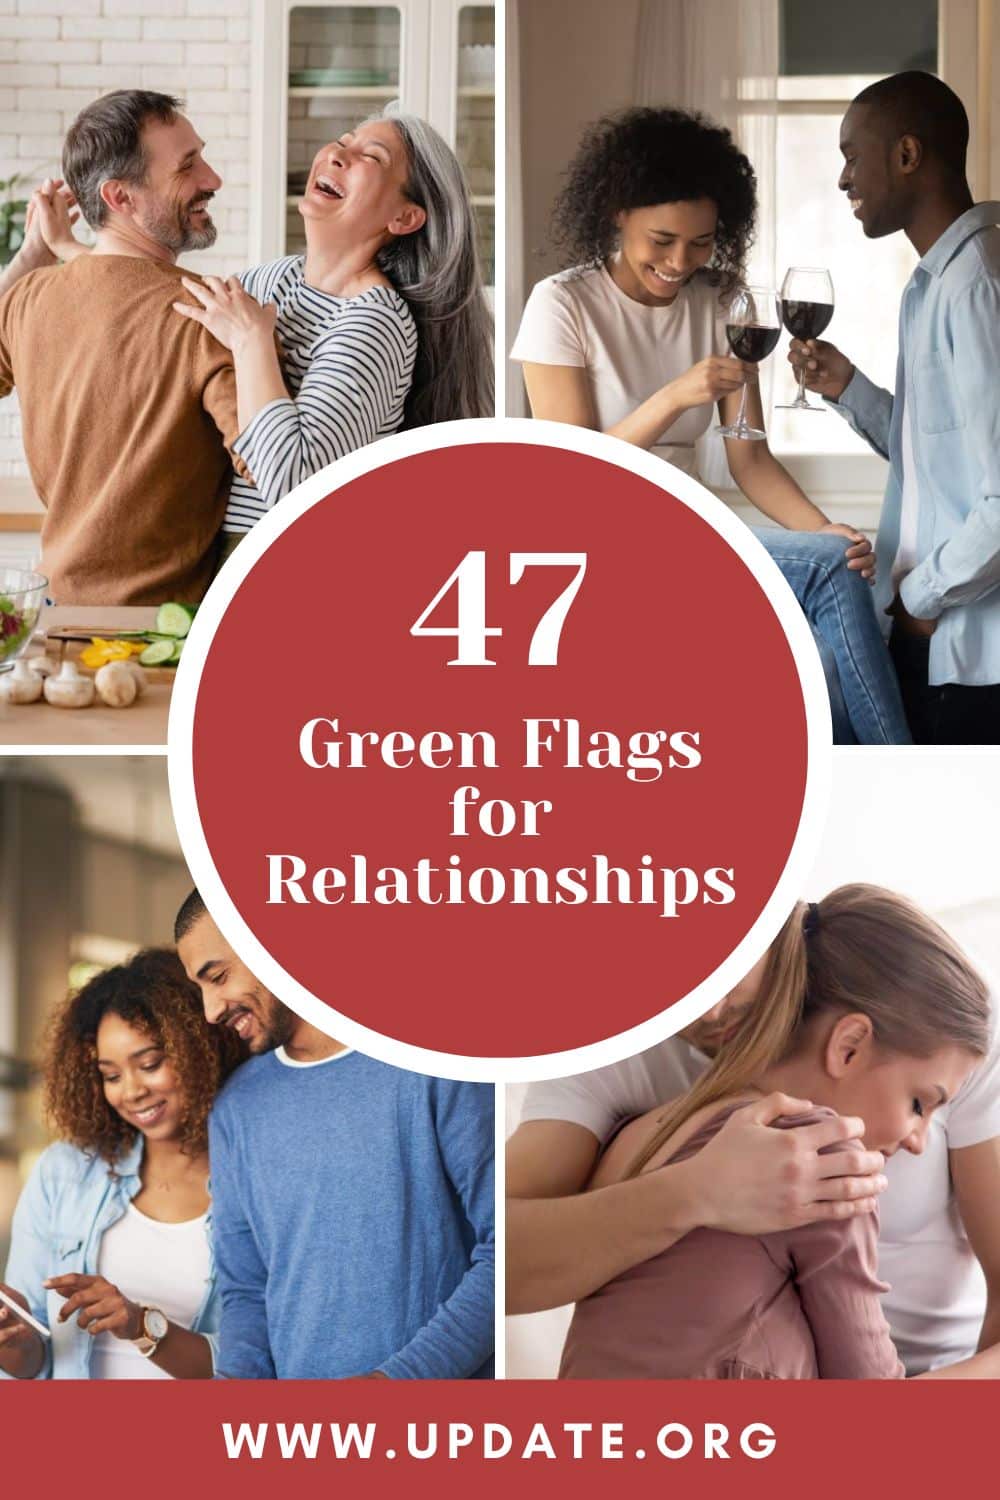 47 Green Flags for Relationships pinterest image.